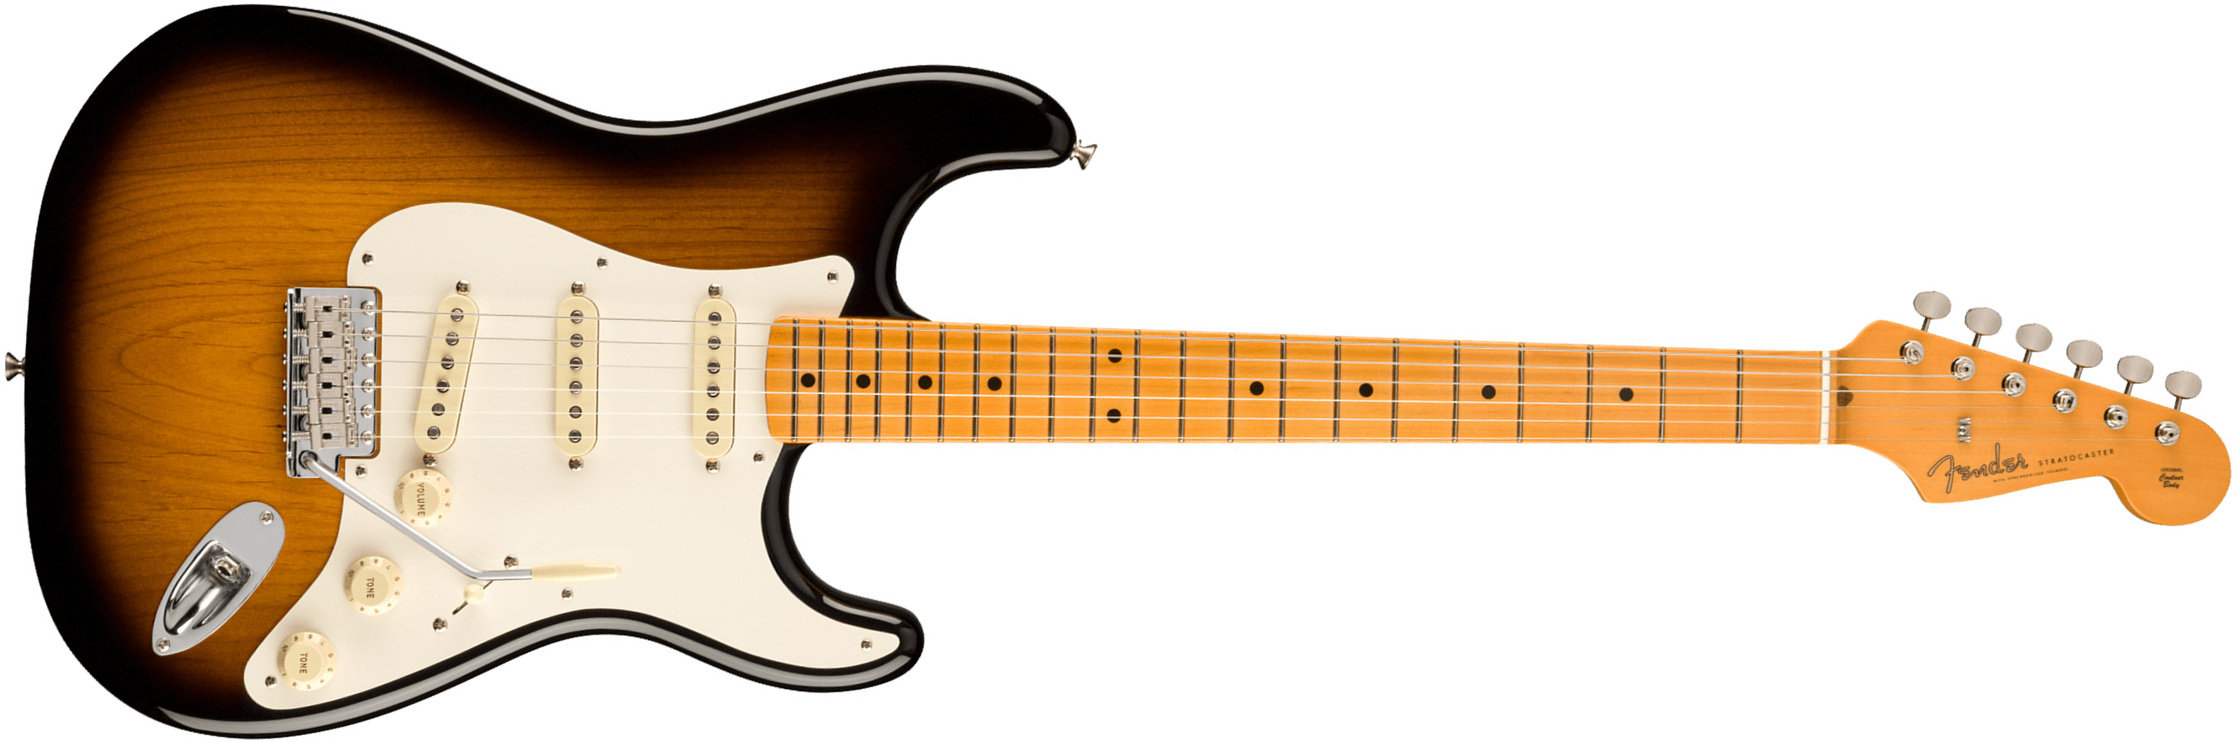 Fender Strat 1957 American Vintage Ii Usa 3s Trem Mn - 2-color Sunburst - Elektrische gitaar in Str-vorm - Main picture